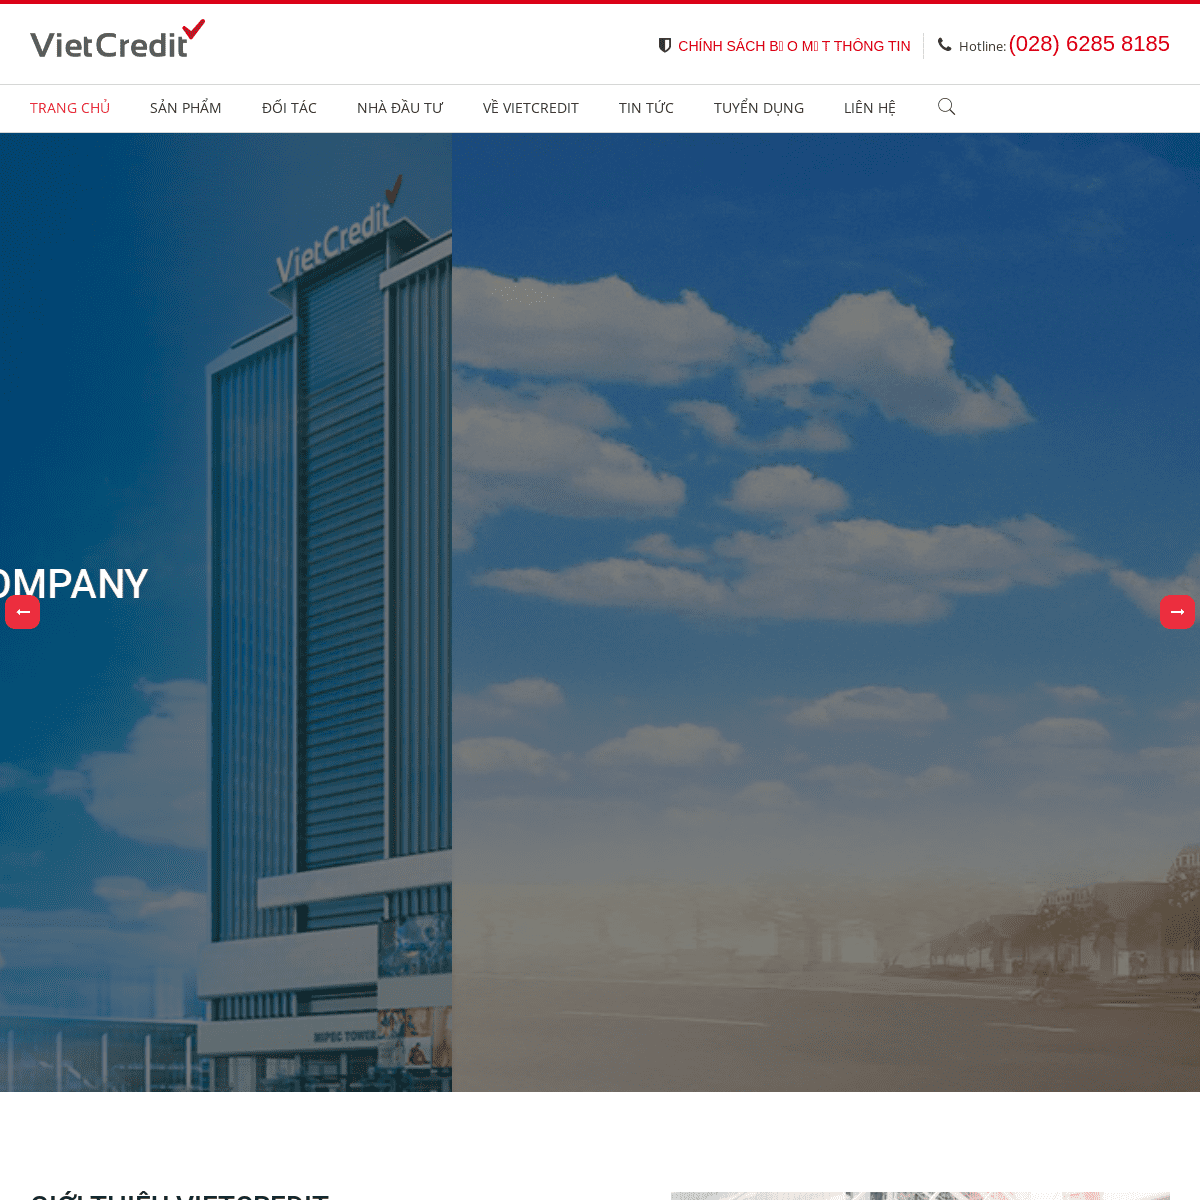 A complete backup of vietcredit.com.vn